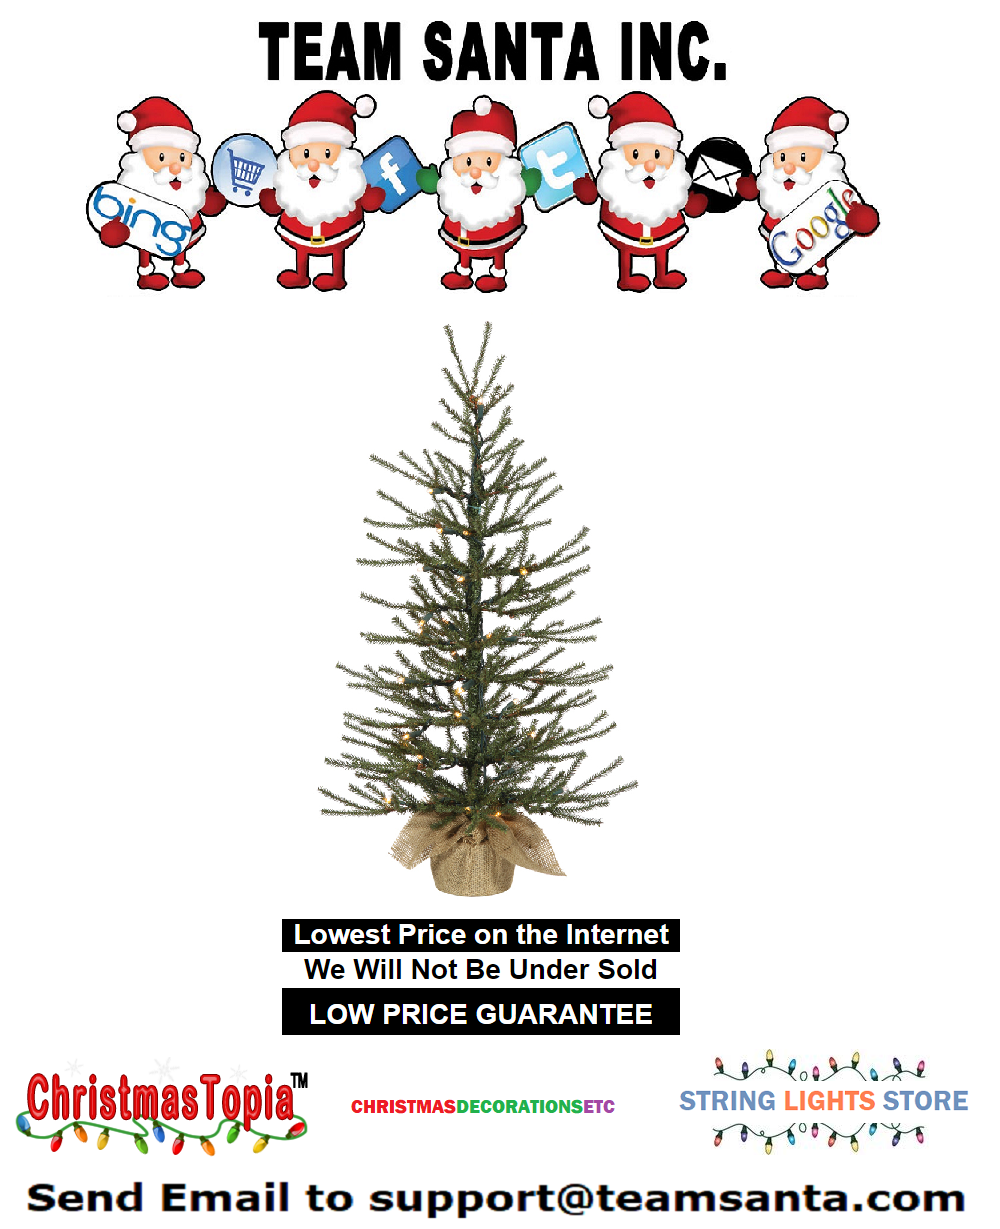 Small Pre-Decorated Christmas Trees Make a Terrific Fund Raising Idea 